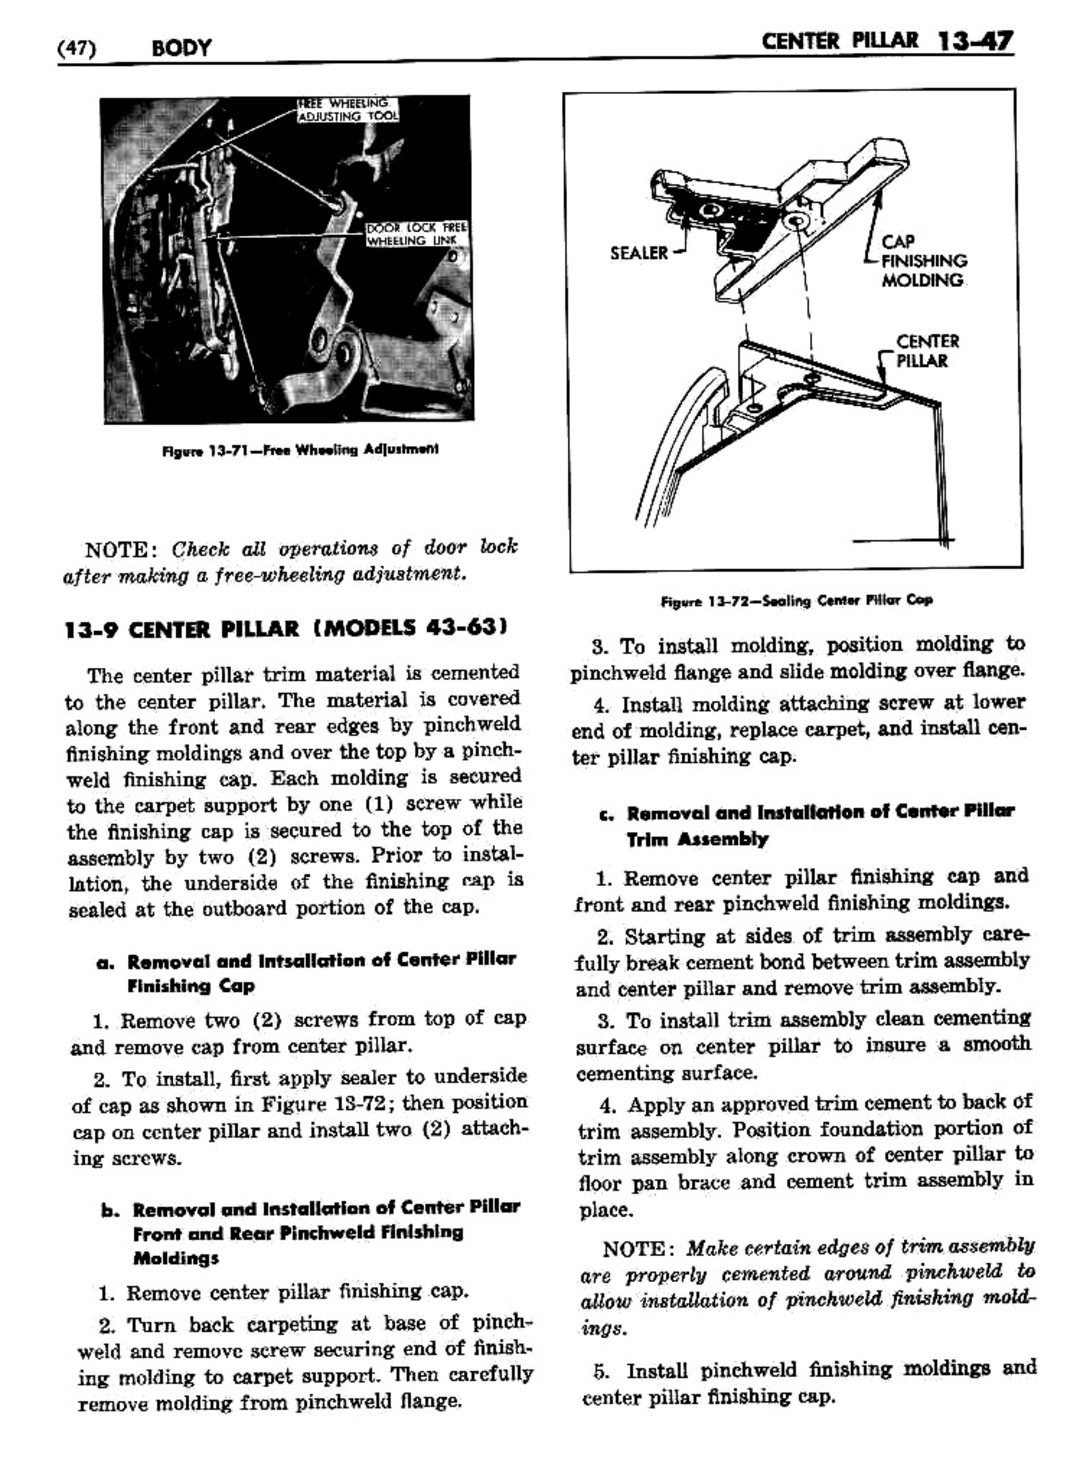 n_1957 Buick Body Service Manual-049-049.jpg